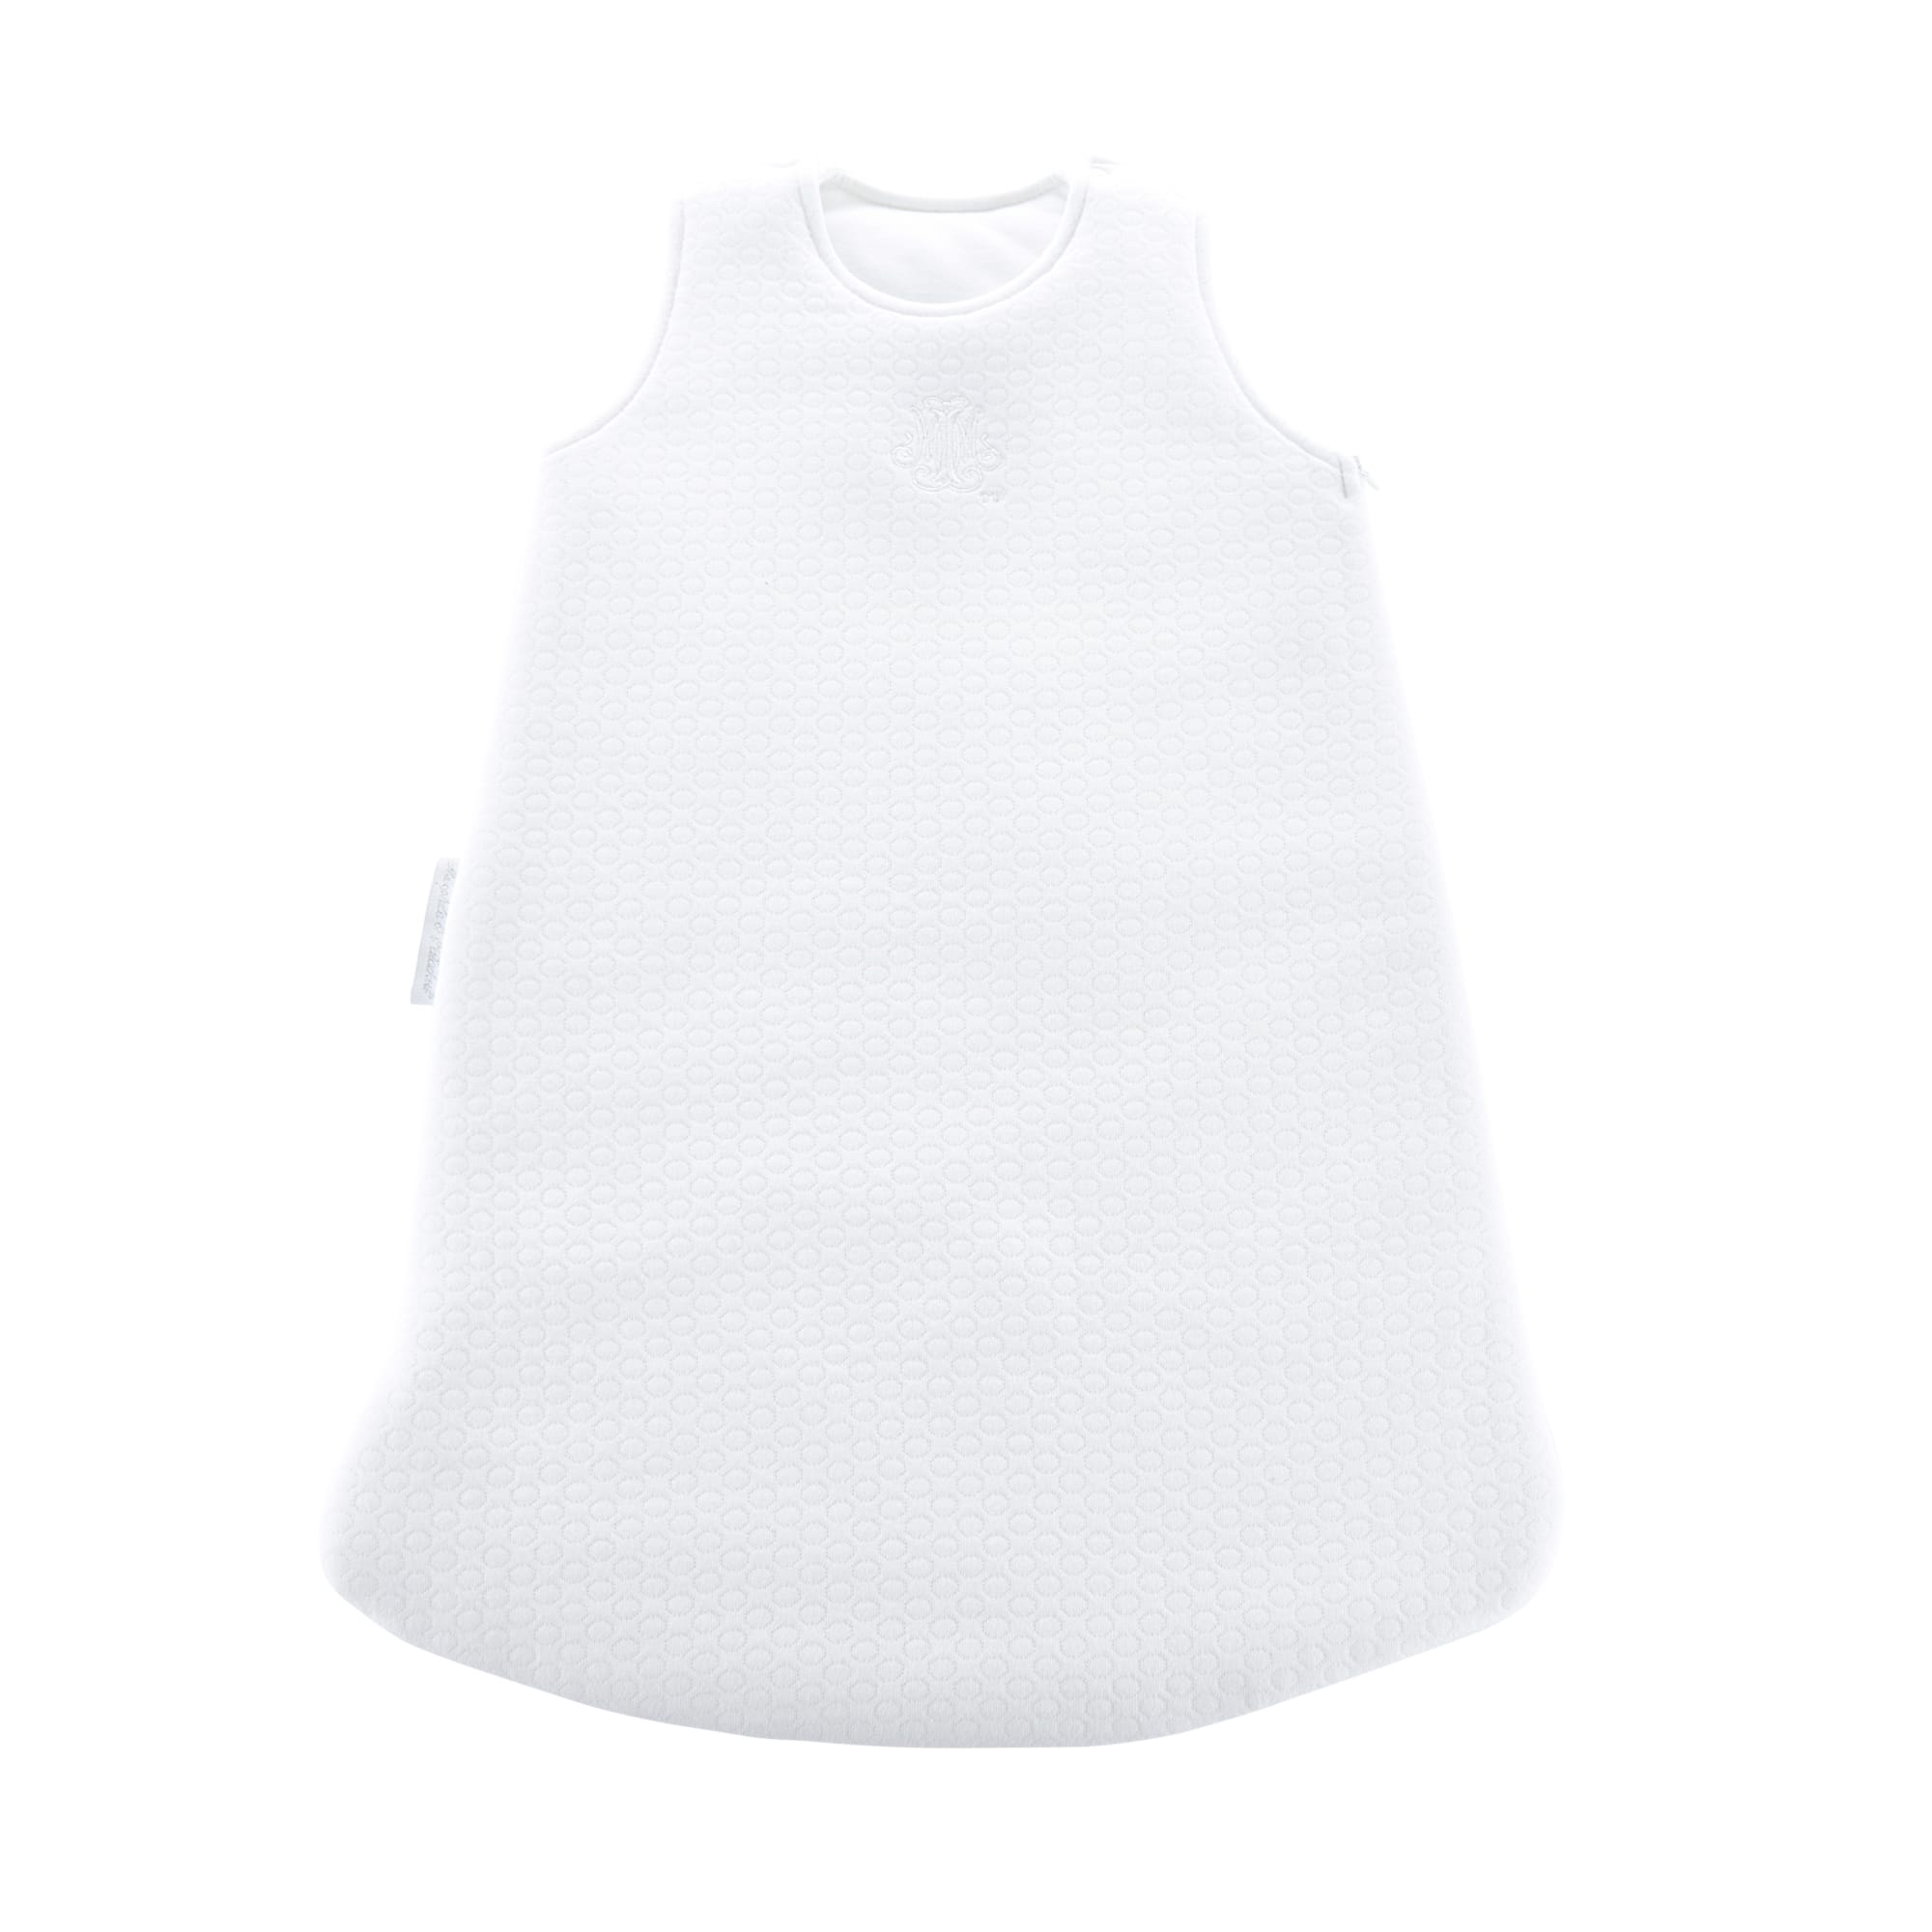 Theophile & Patachou Baby Sleeping Bag 60 cm - Jersey White